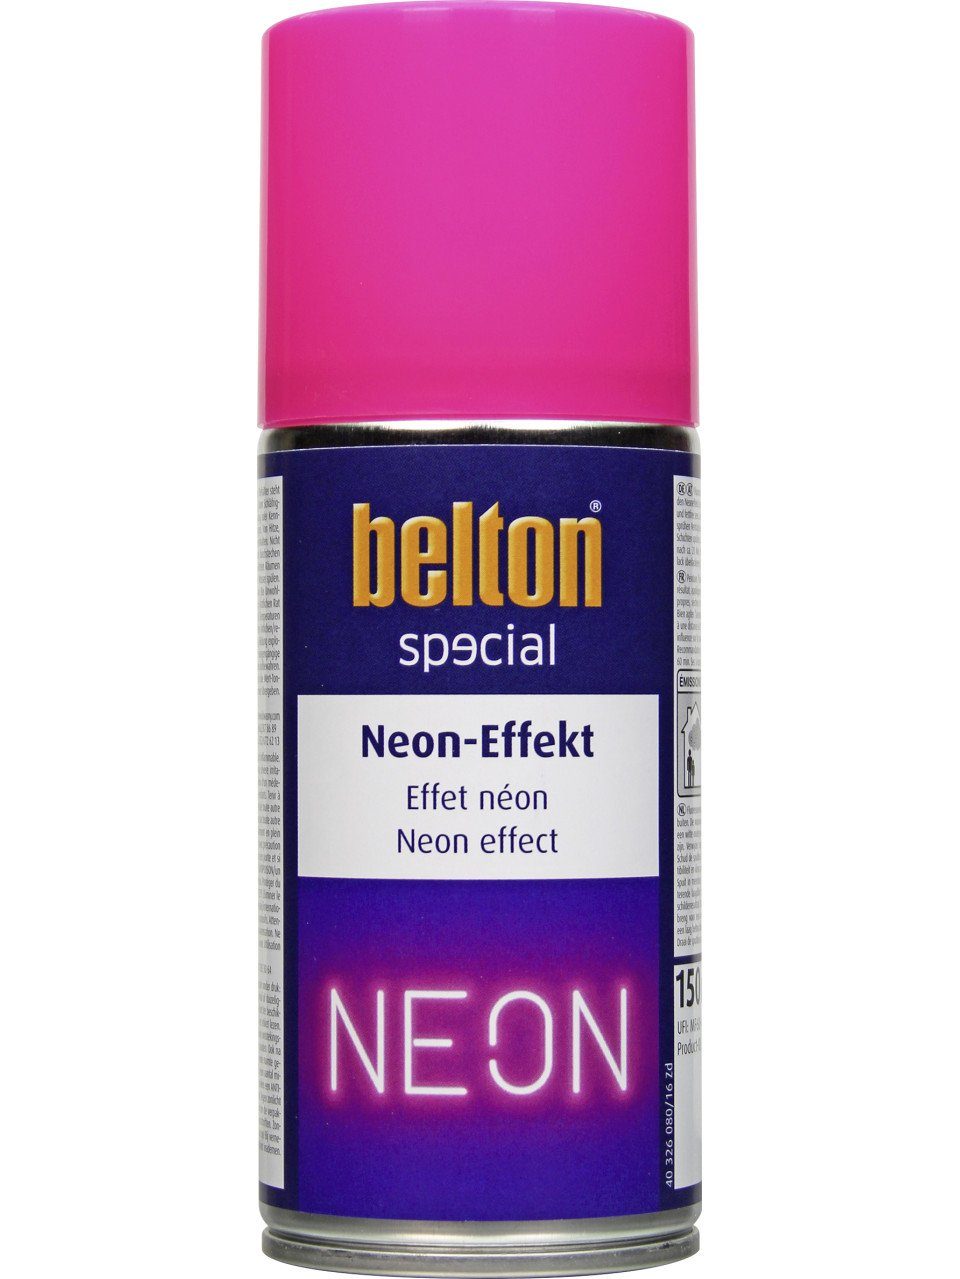 belton Sprühlack Belton special Neon-Effekt Spray 150 ml pink